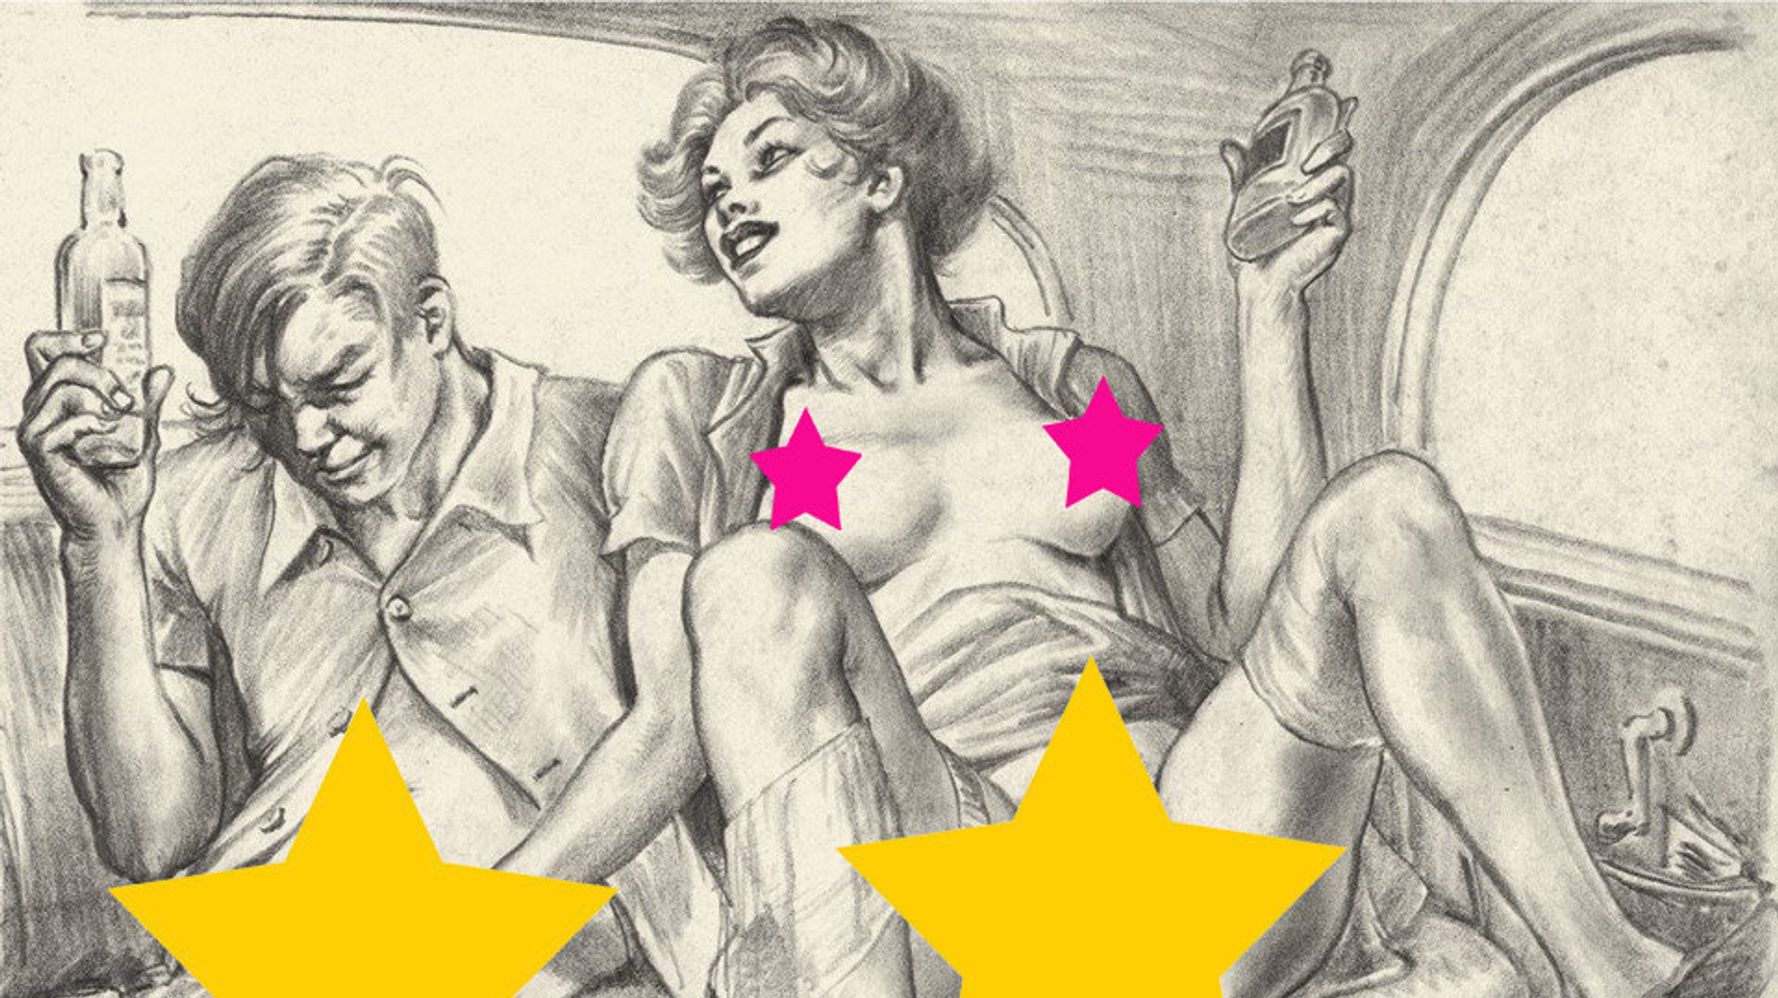 Erotic Porn 1940s - The Strange Case Of Thomas Poulton, An Erotic Artist In The 1940s (NSFW) |  HuffPost Entertainment